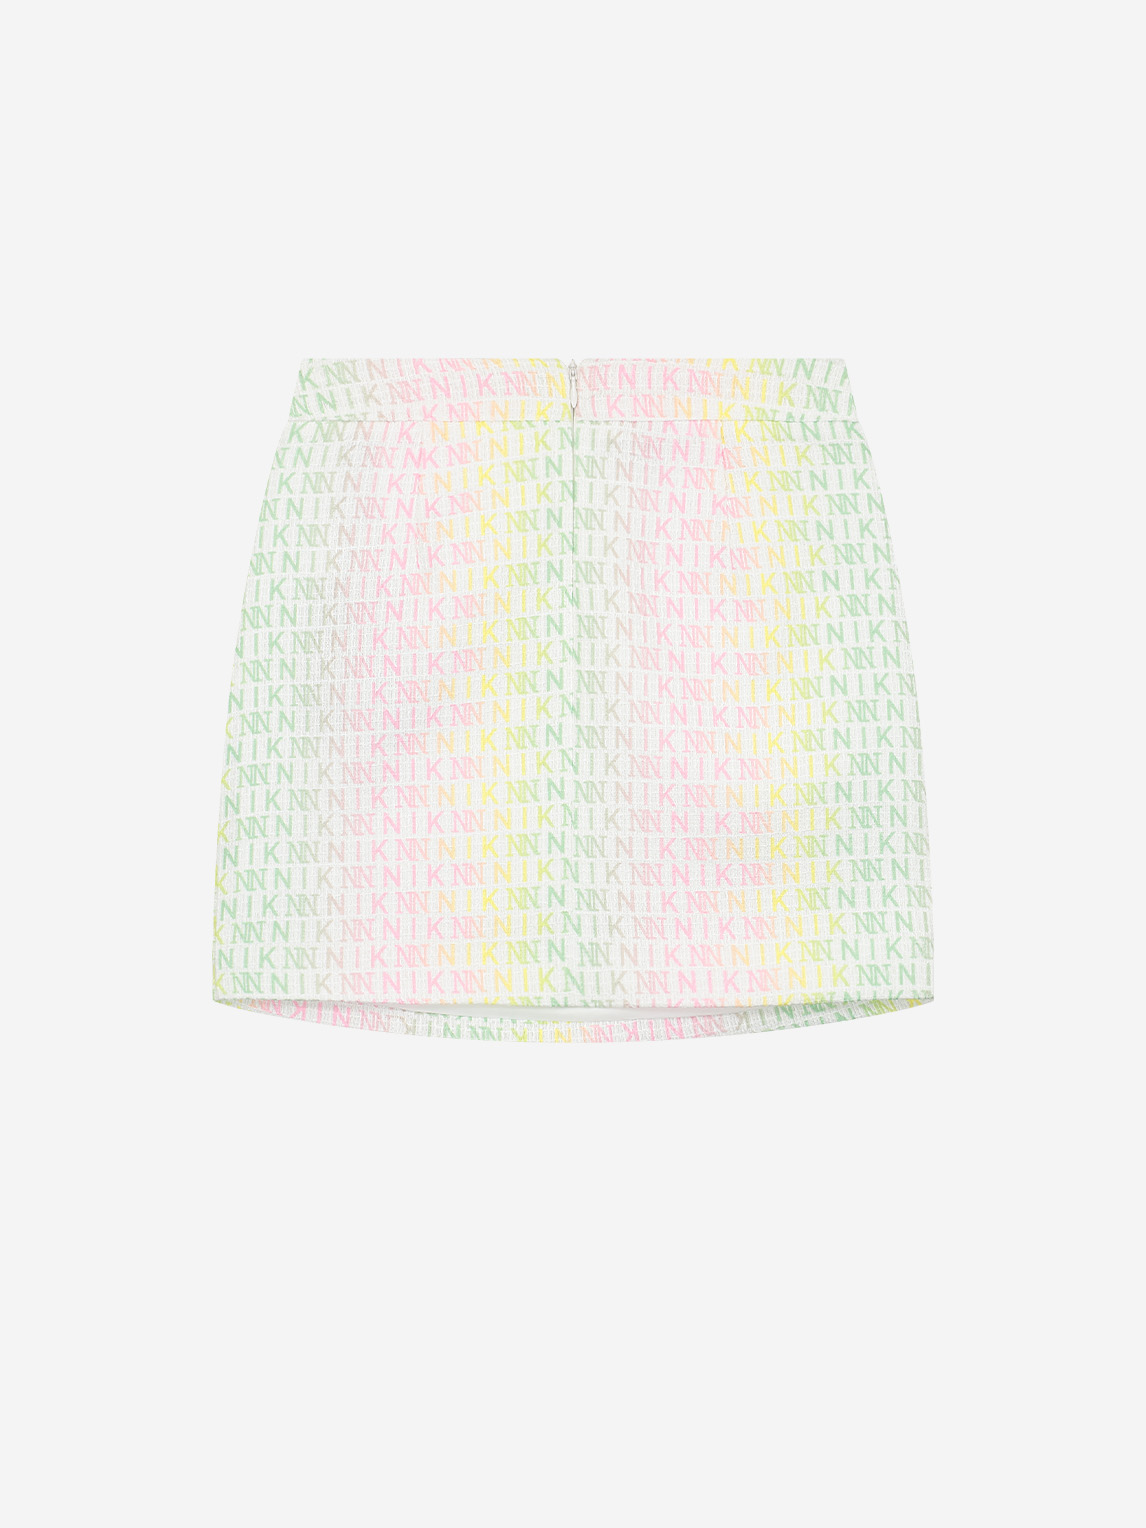 Rainbow Skirt